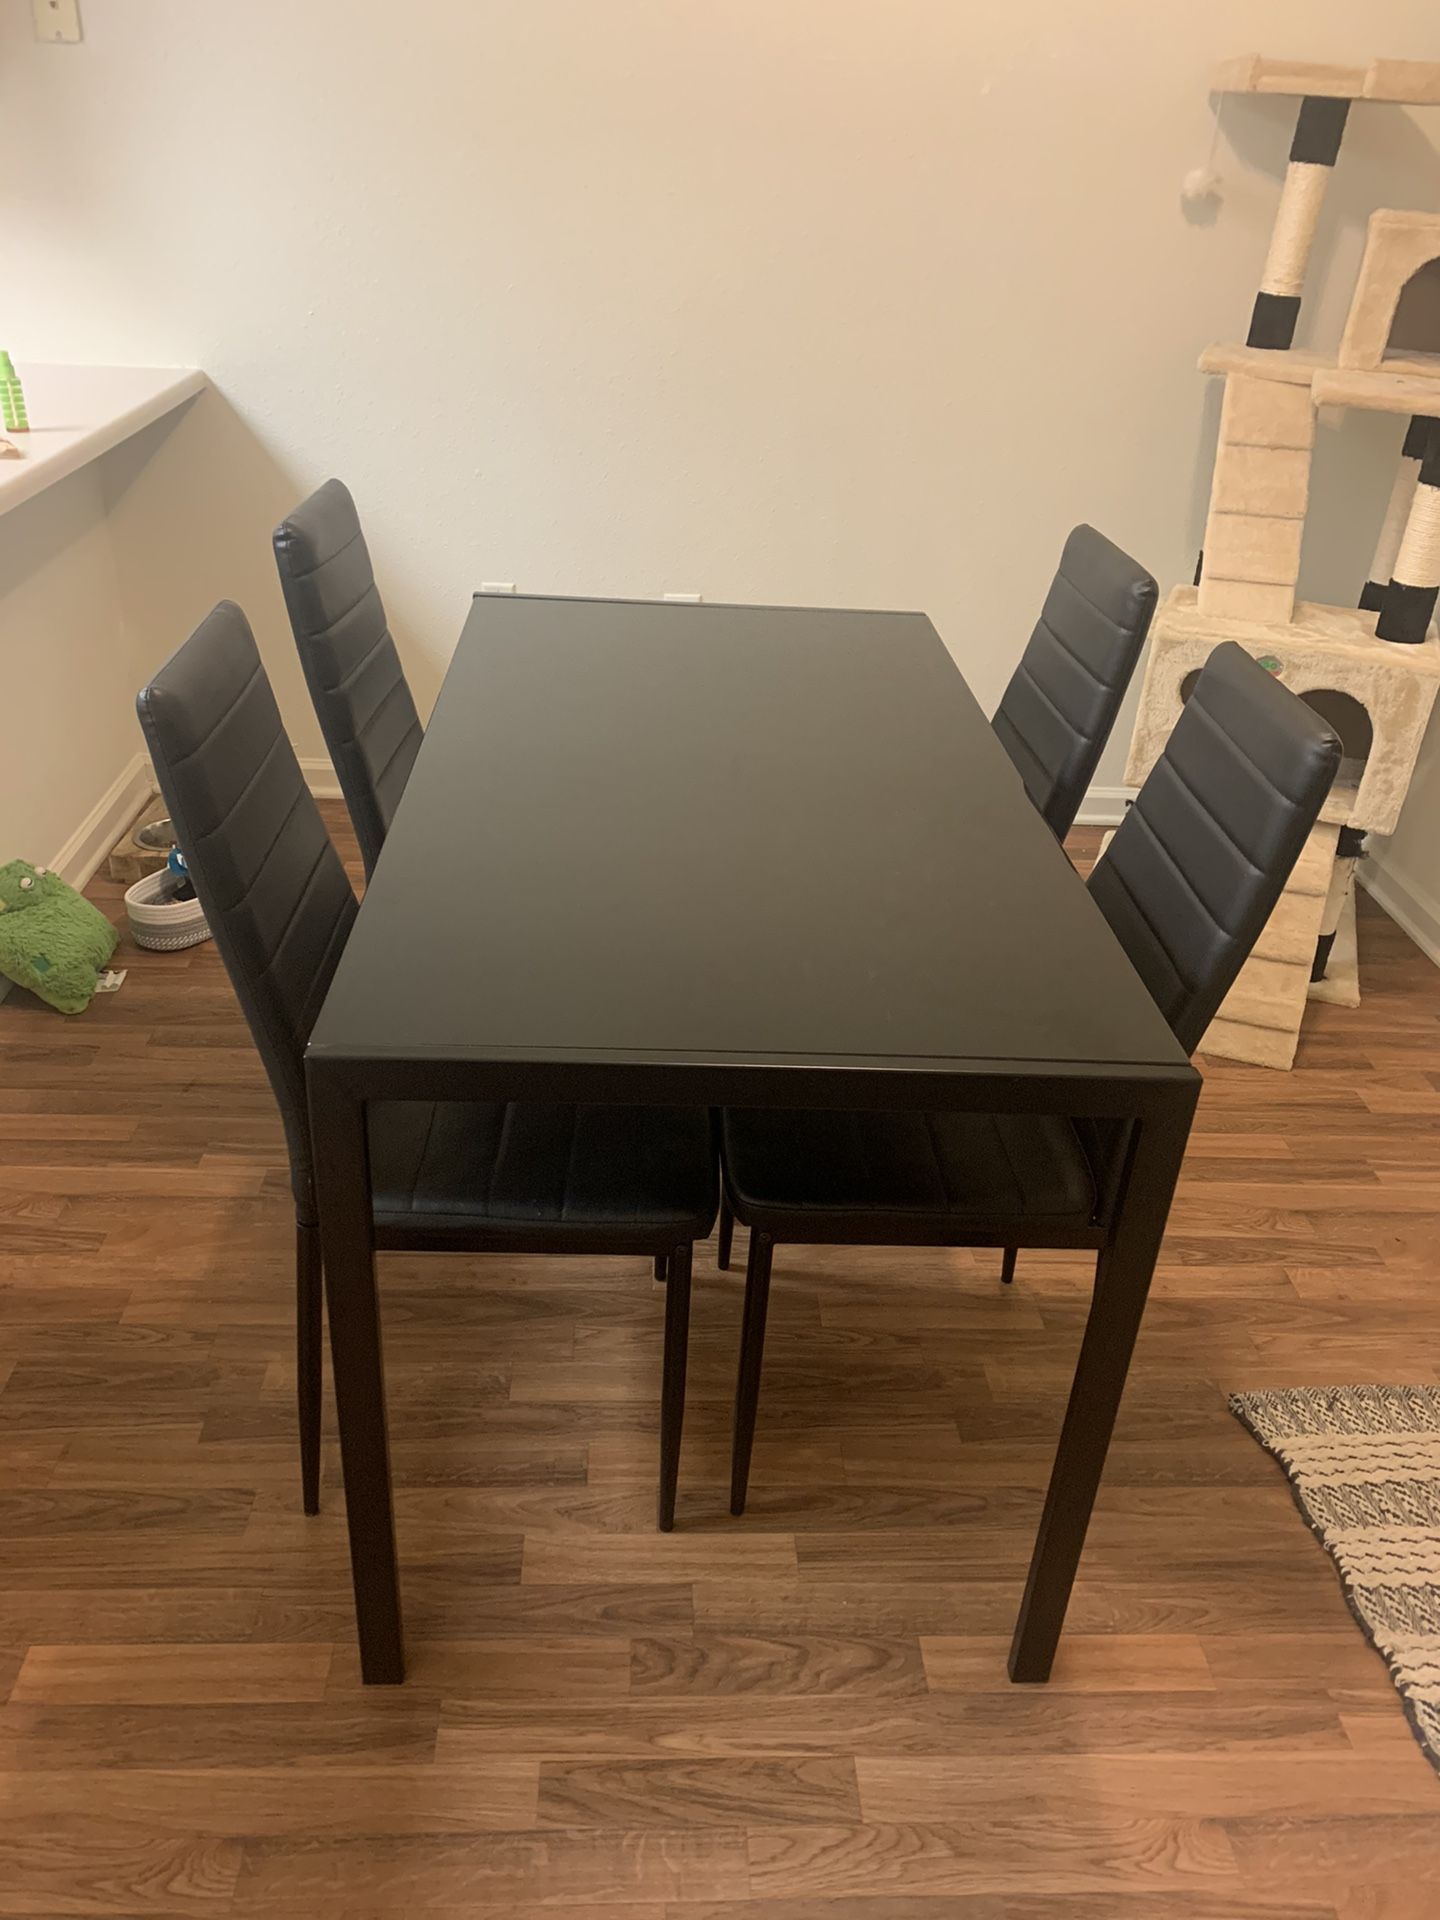 Black kitchen table